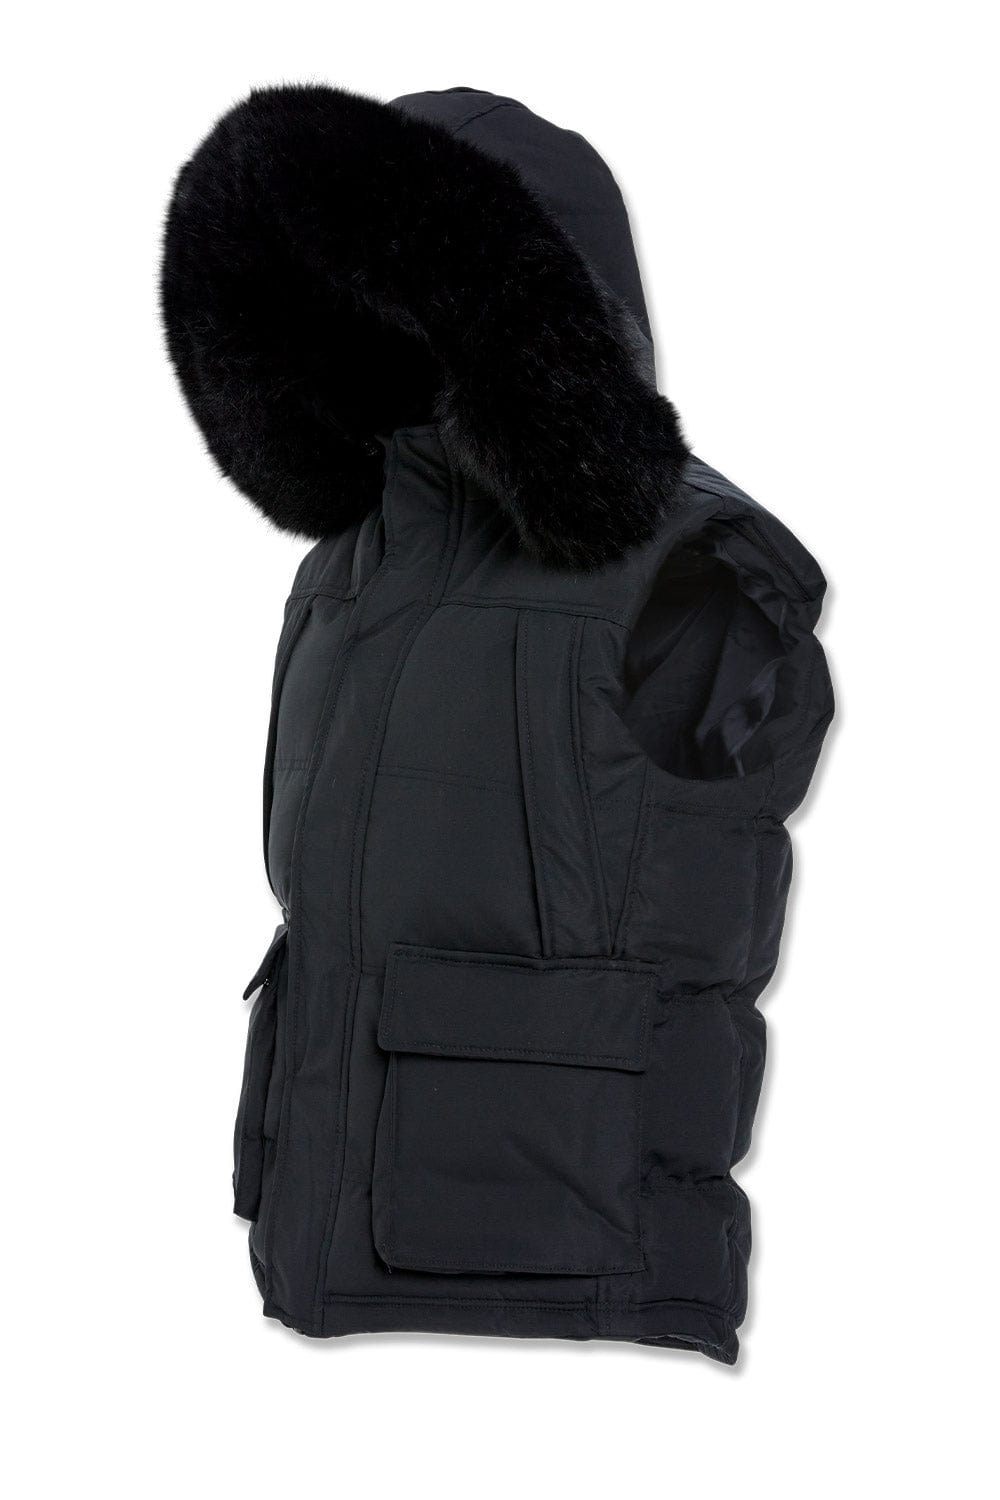 Jordan Craig Yukon Fur Lined Puffer Vest (Black)